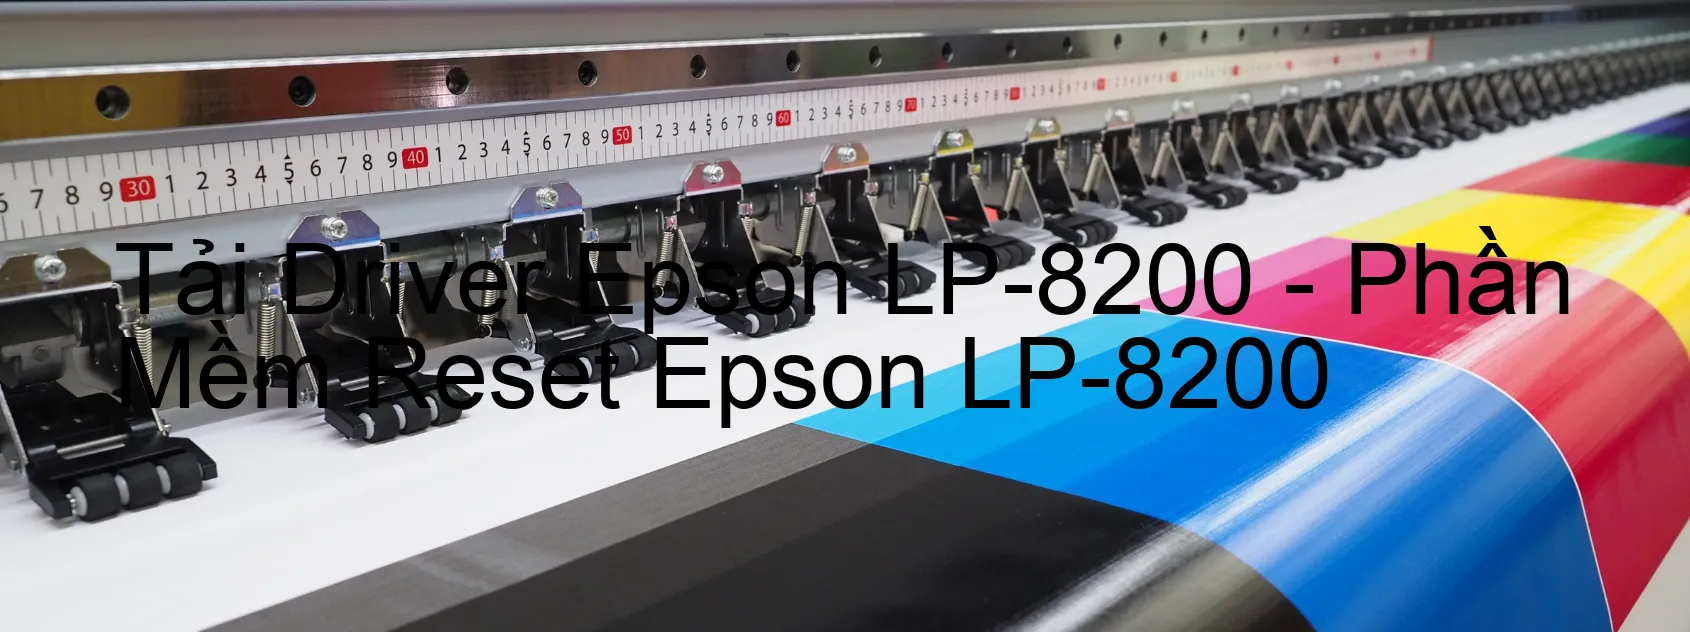 Driver Epson LP-8200, Phần Mềm Reset Epson LP-8200